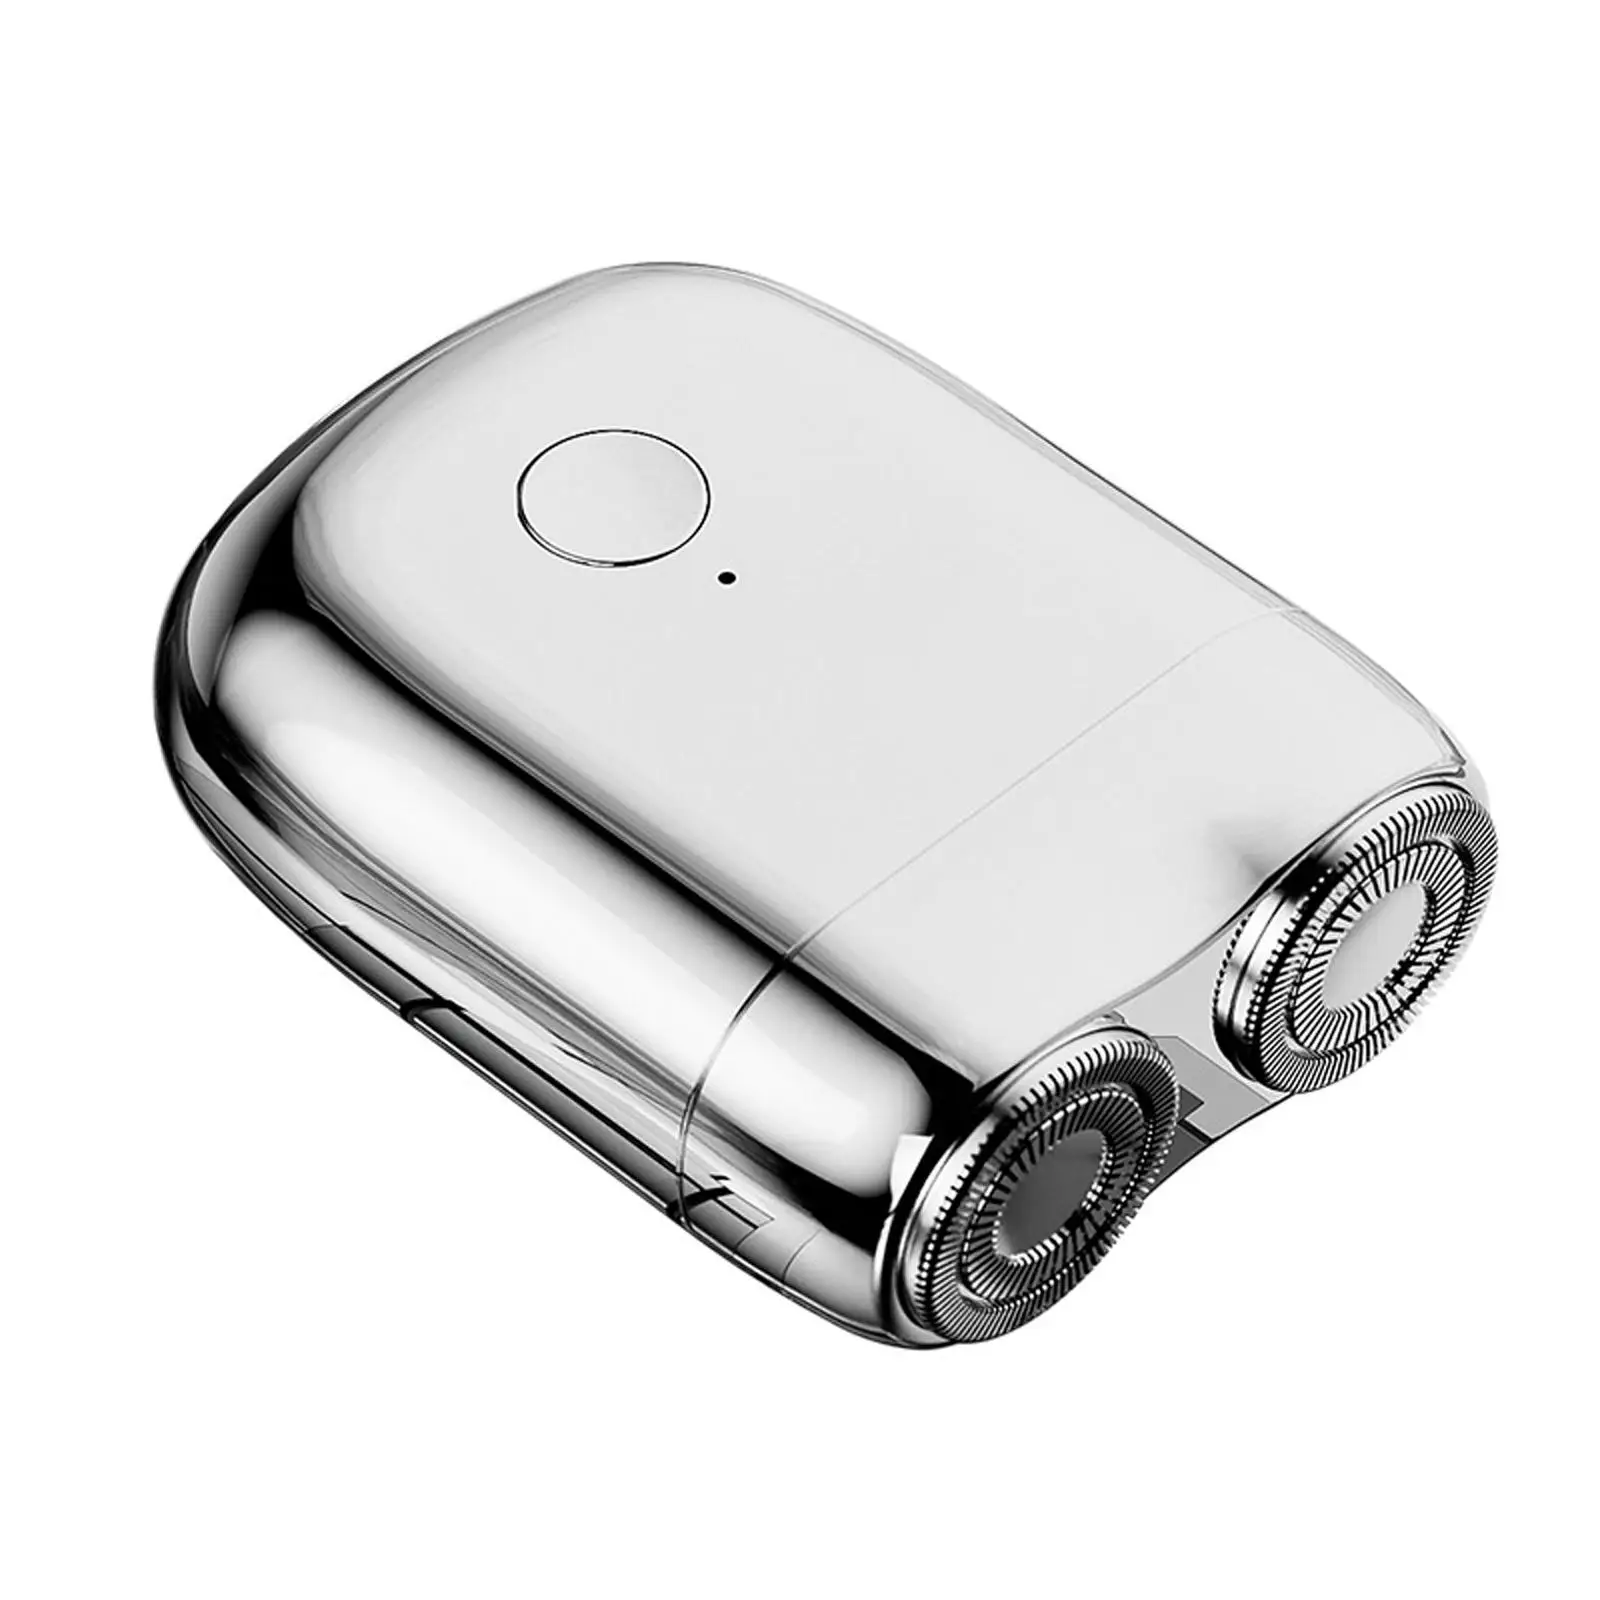 Electric Razor LED Indicator Electronic Gifts 2 Level Adjustable Pocket Size Cordless Mini Shaver for Home Travel Shaves Men